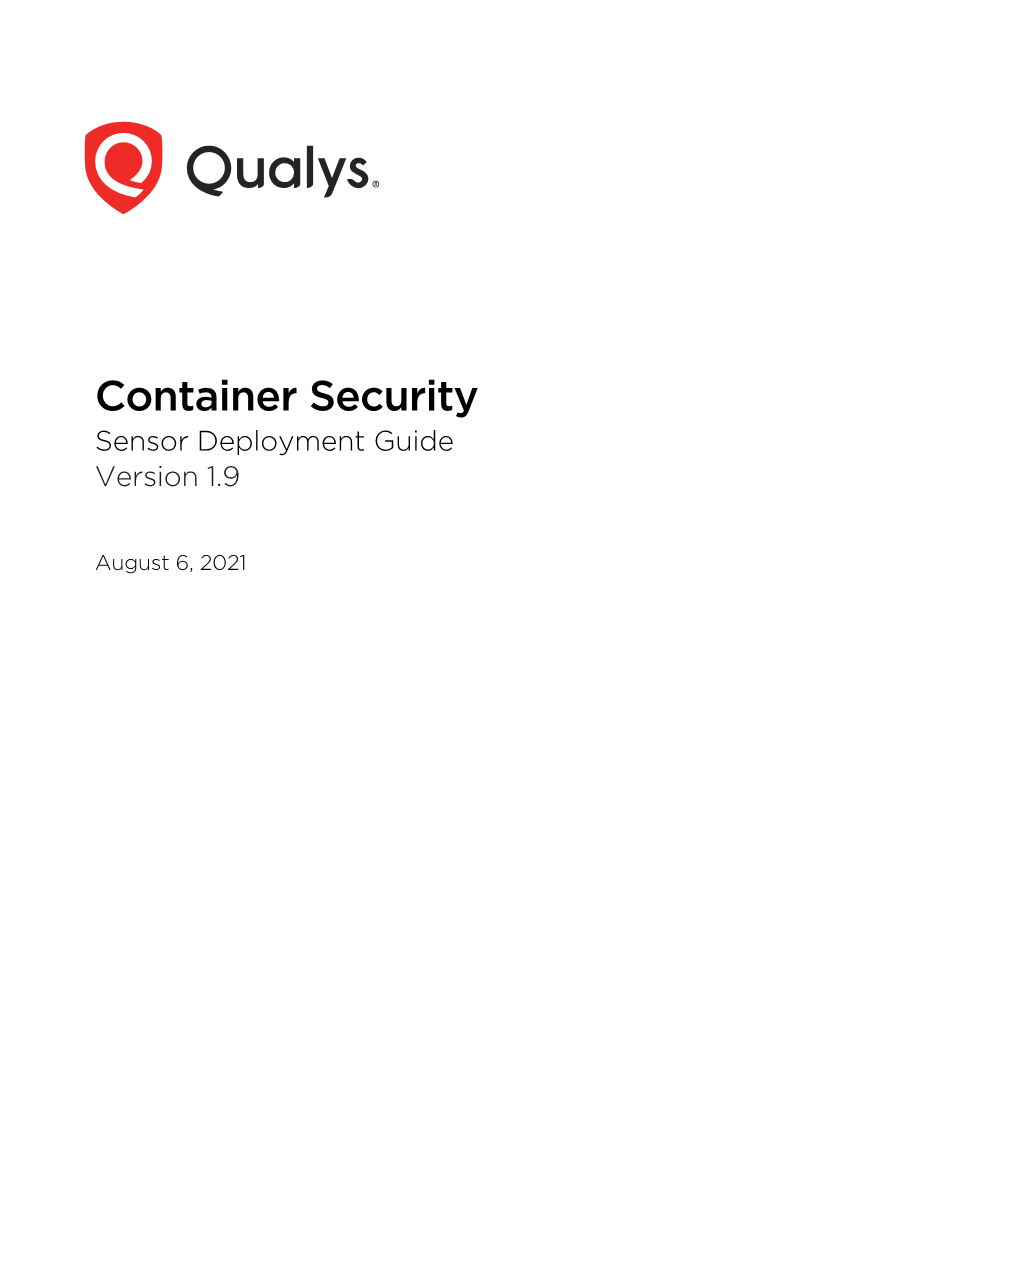 Qualys Container Security Sensor Deployment Guide